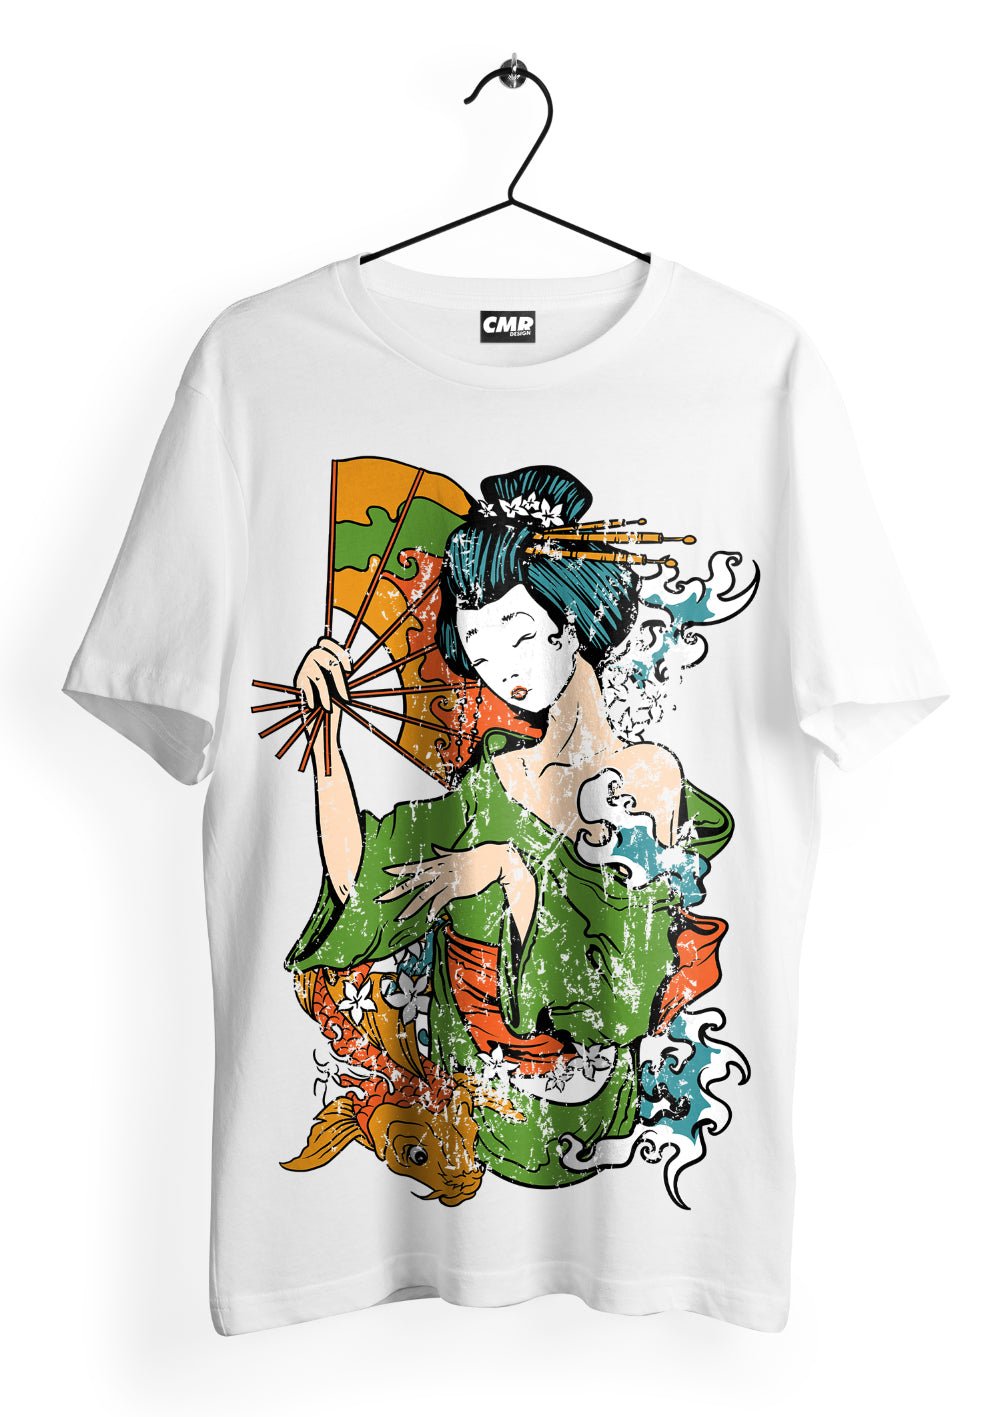 T-Shirt Maglietta Geisha Giapponese Urban Style T-Shirt CmrDesignStore Fronte S 